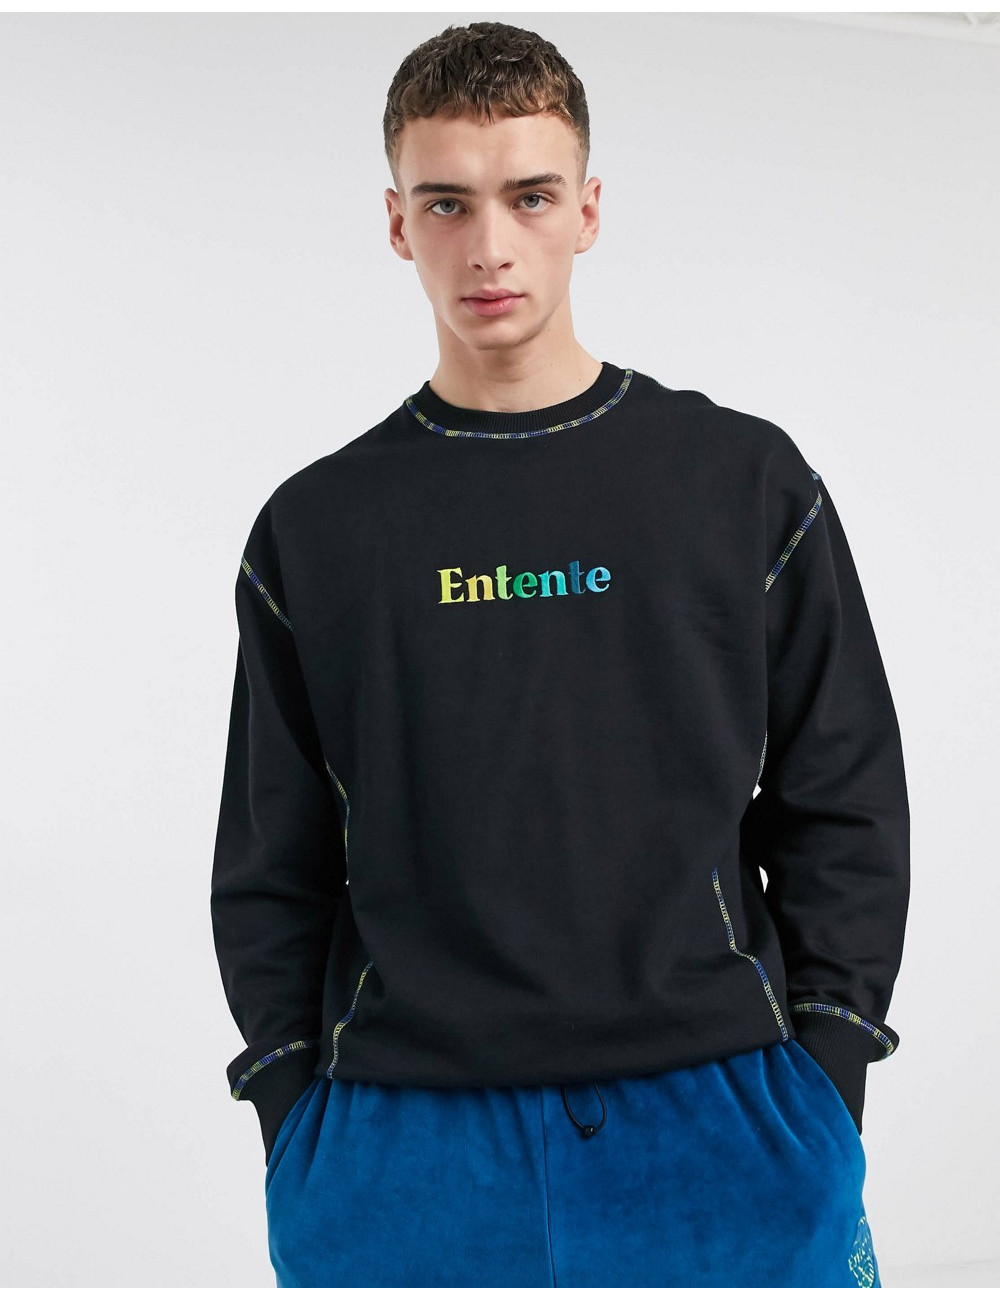 Entente sweatshirt with...